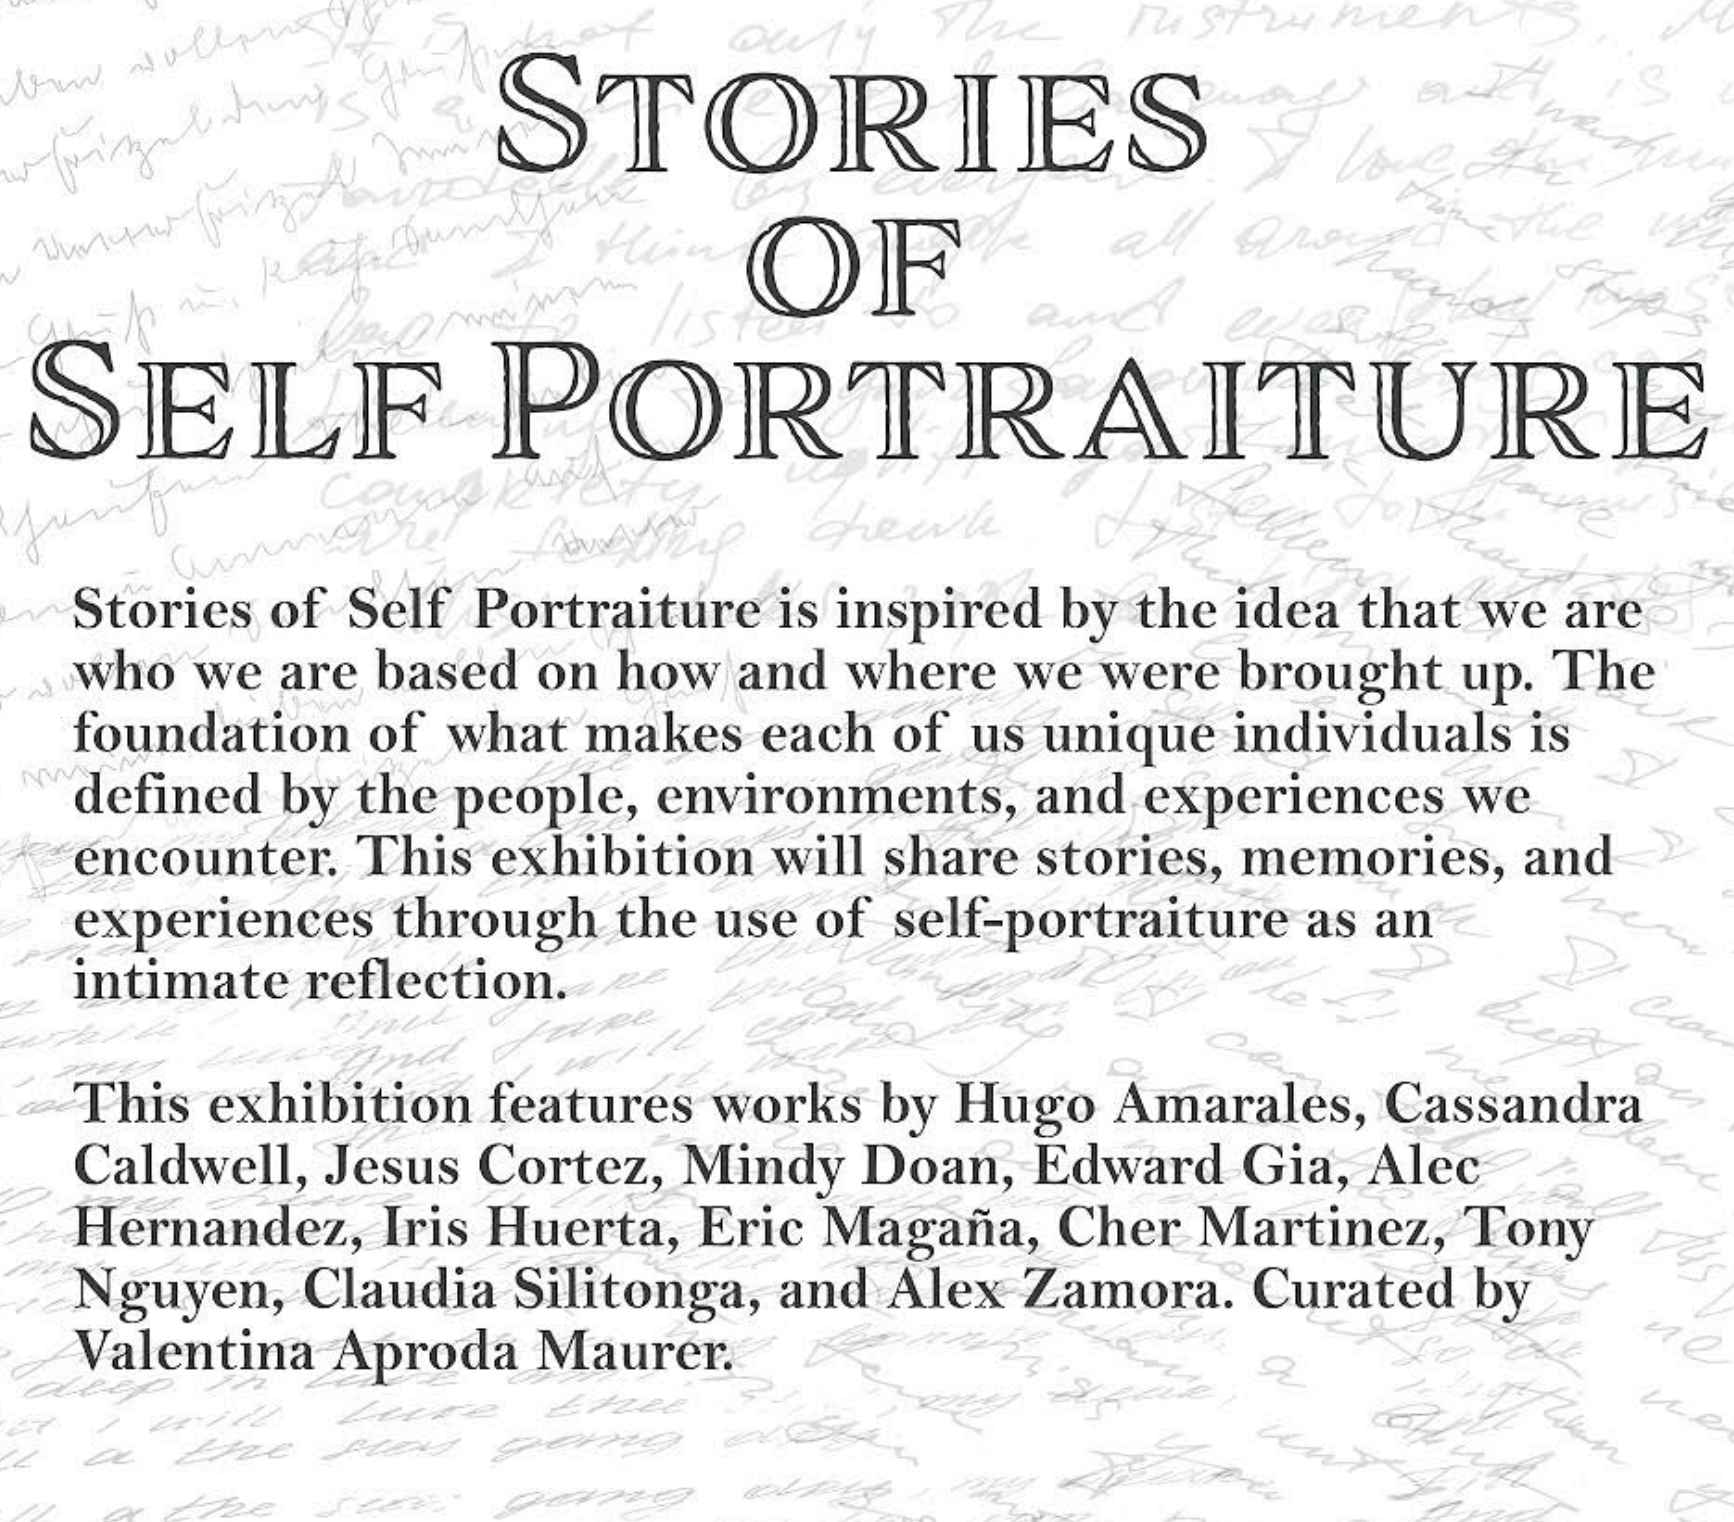 'Stories of Self Portraiture' description. Text below.